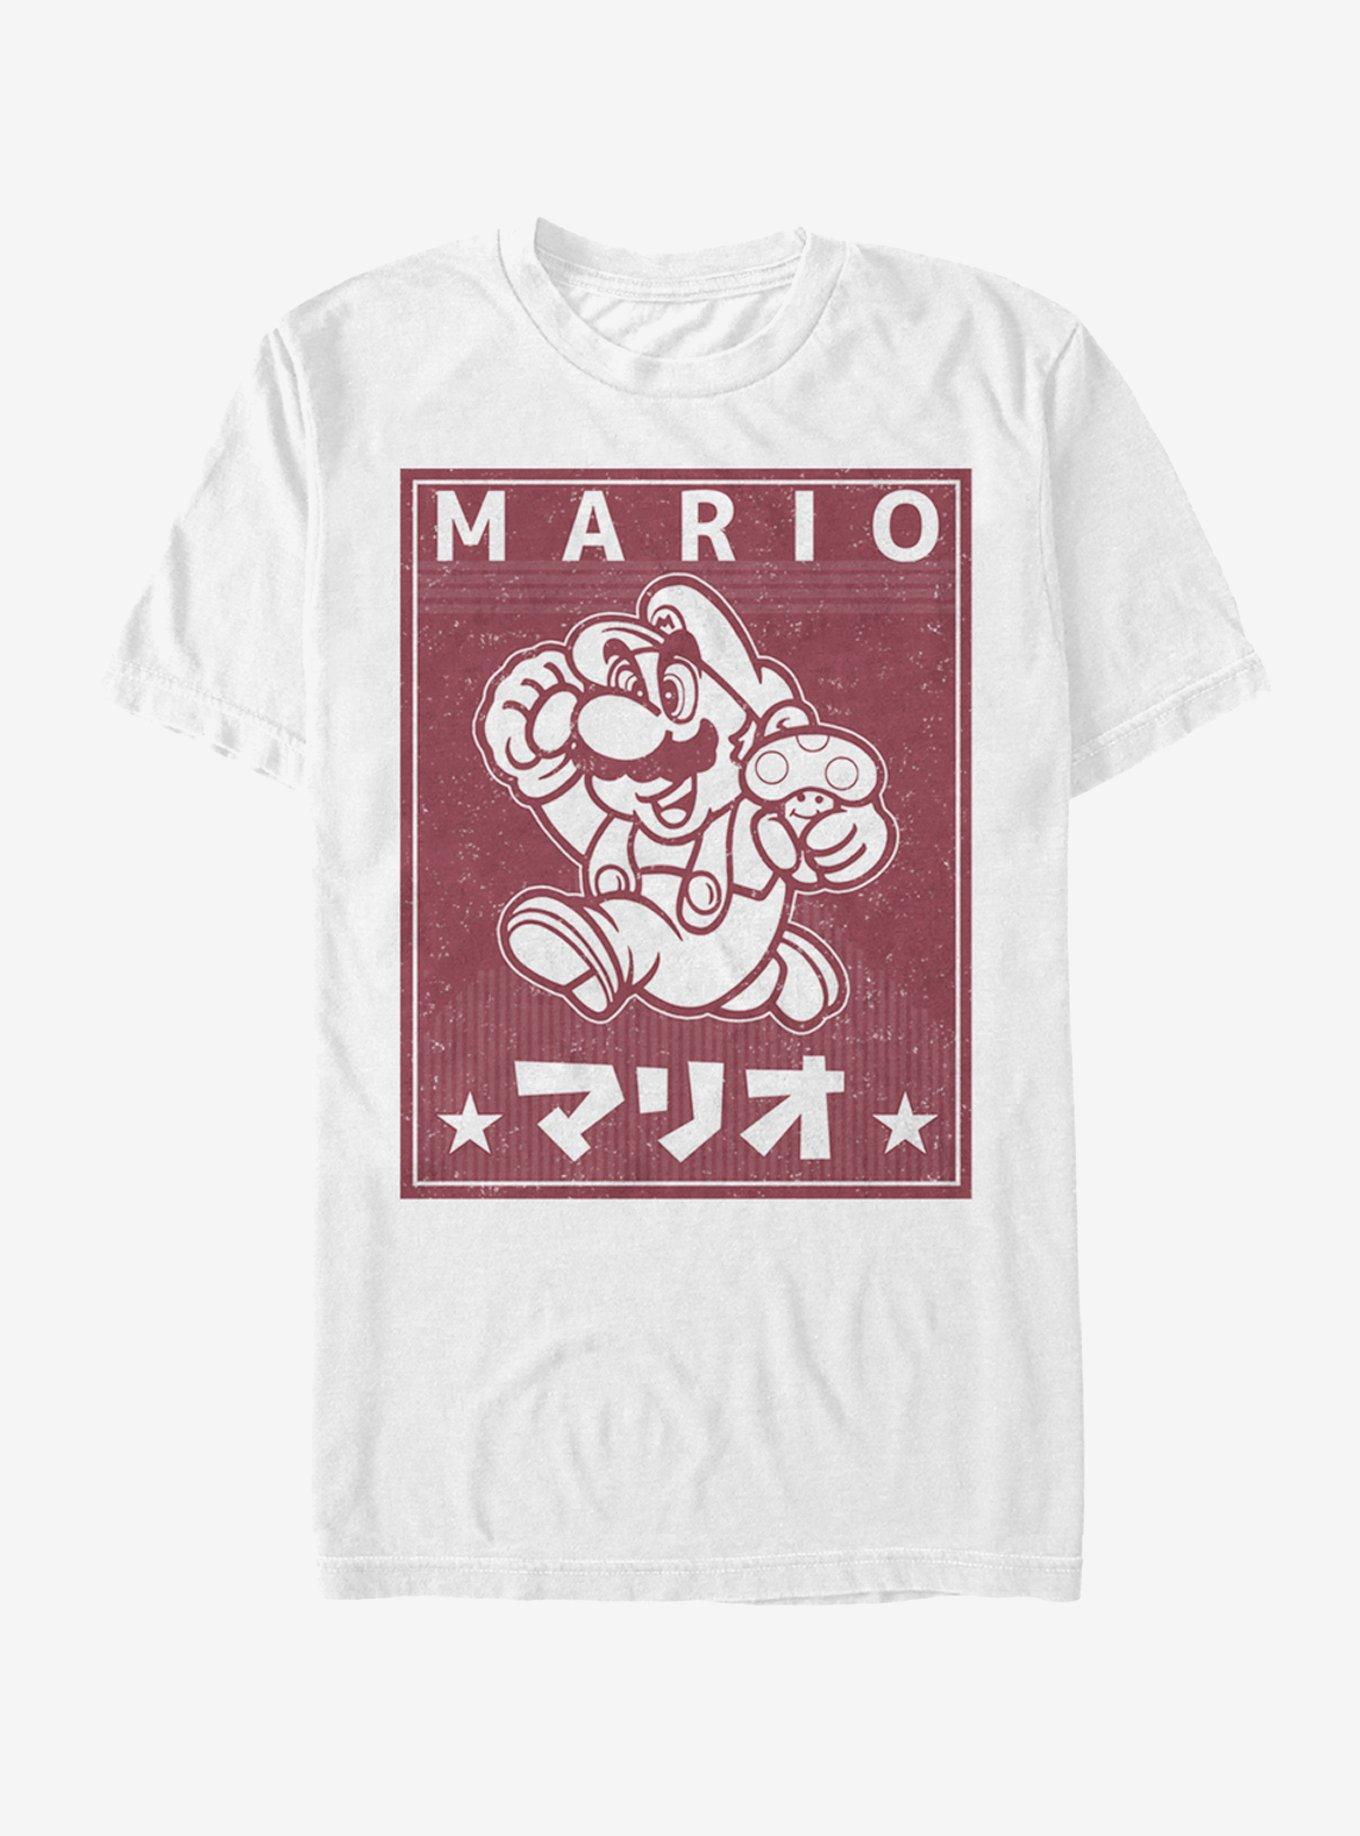 Nintendo Classic Mario and Mushroom T-Shirt